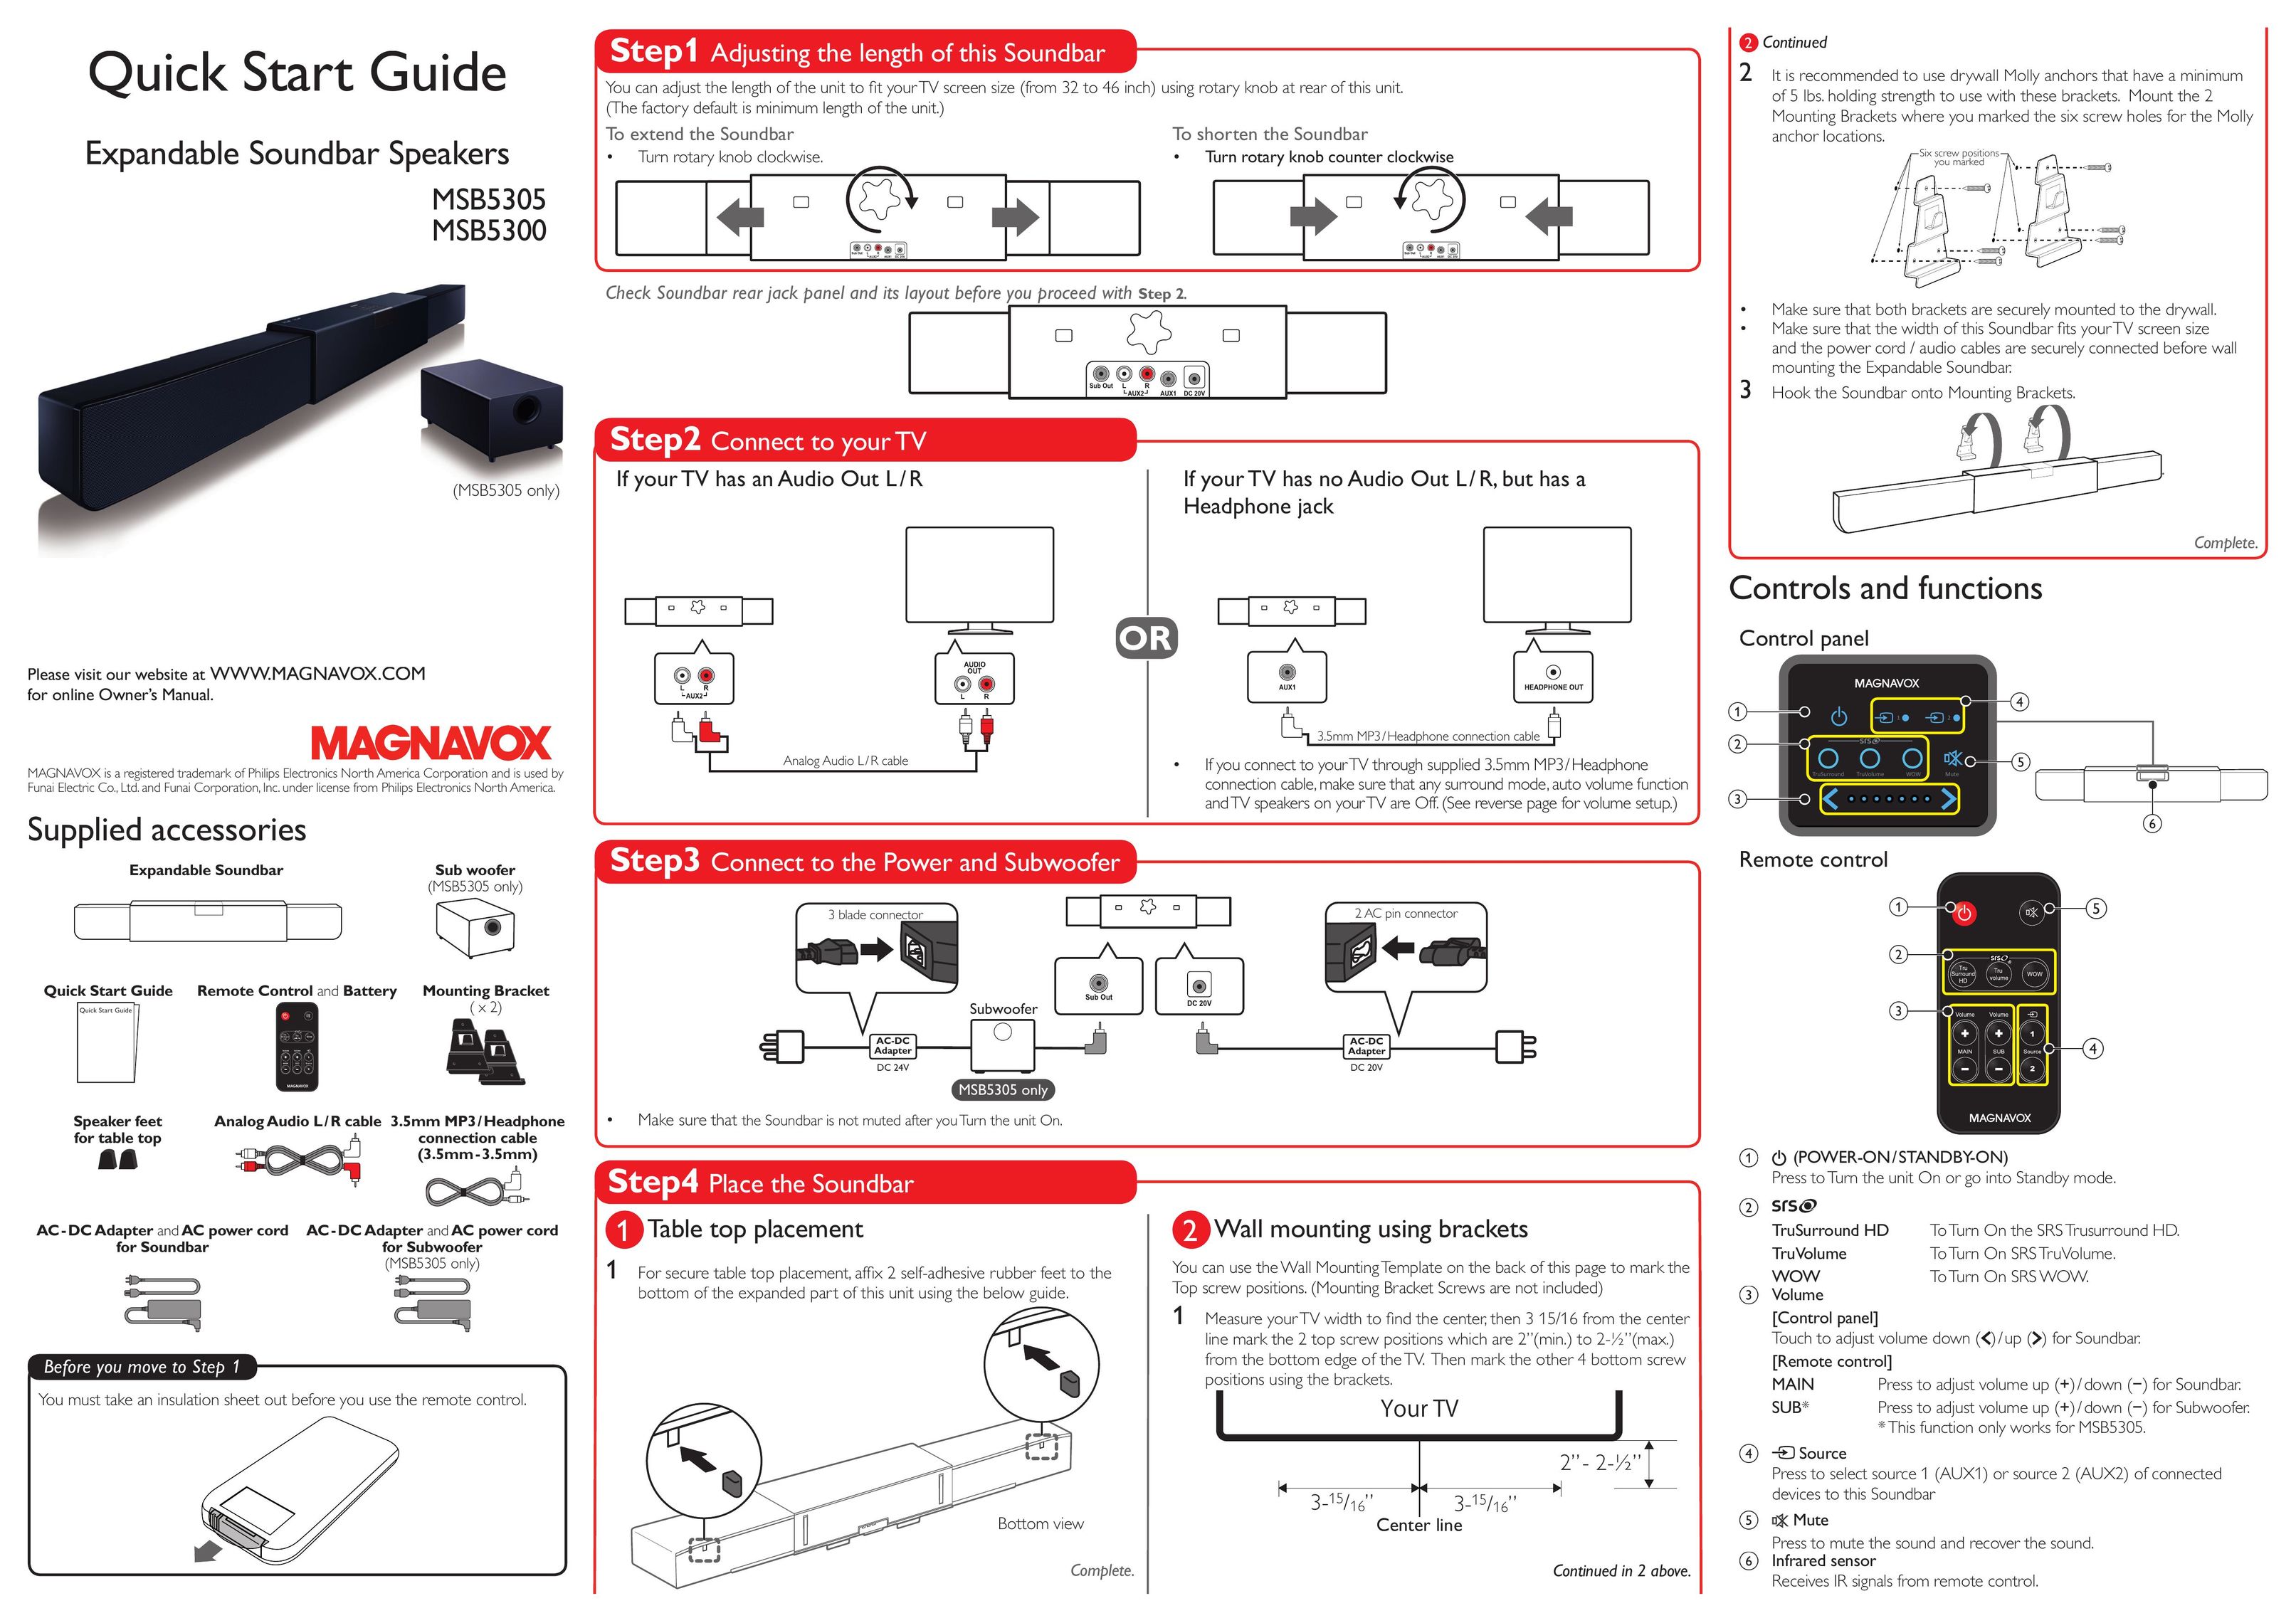 Magnavox MSB5305 Portable Speaker User Manual